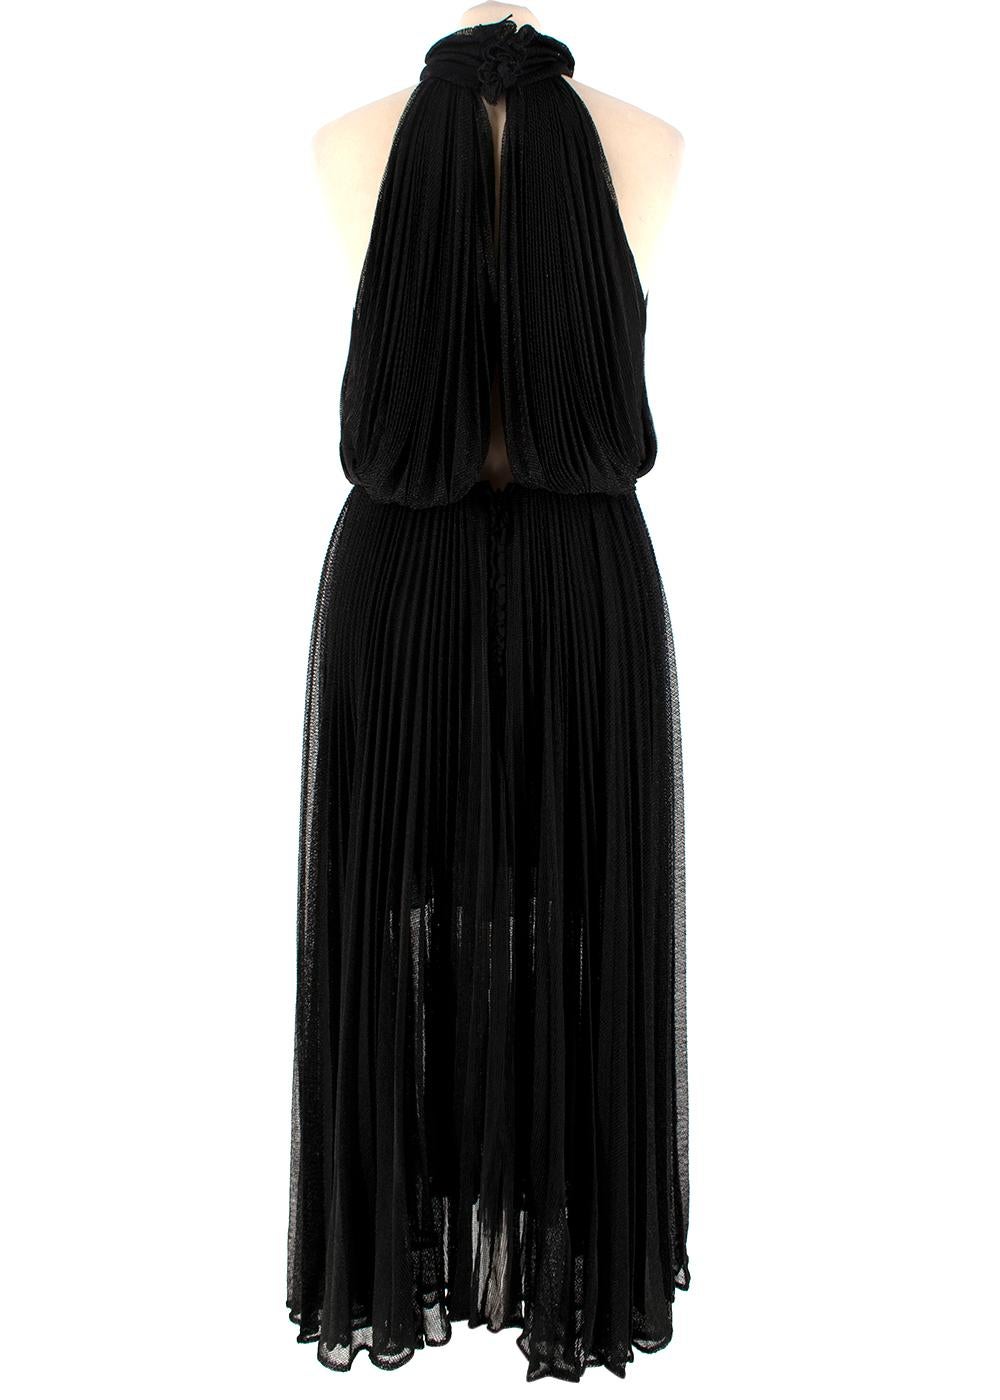 maria lucia hohan's fashion campaign featuring black dress